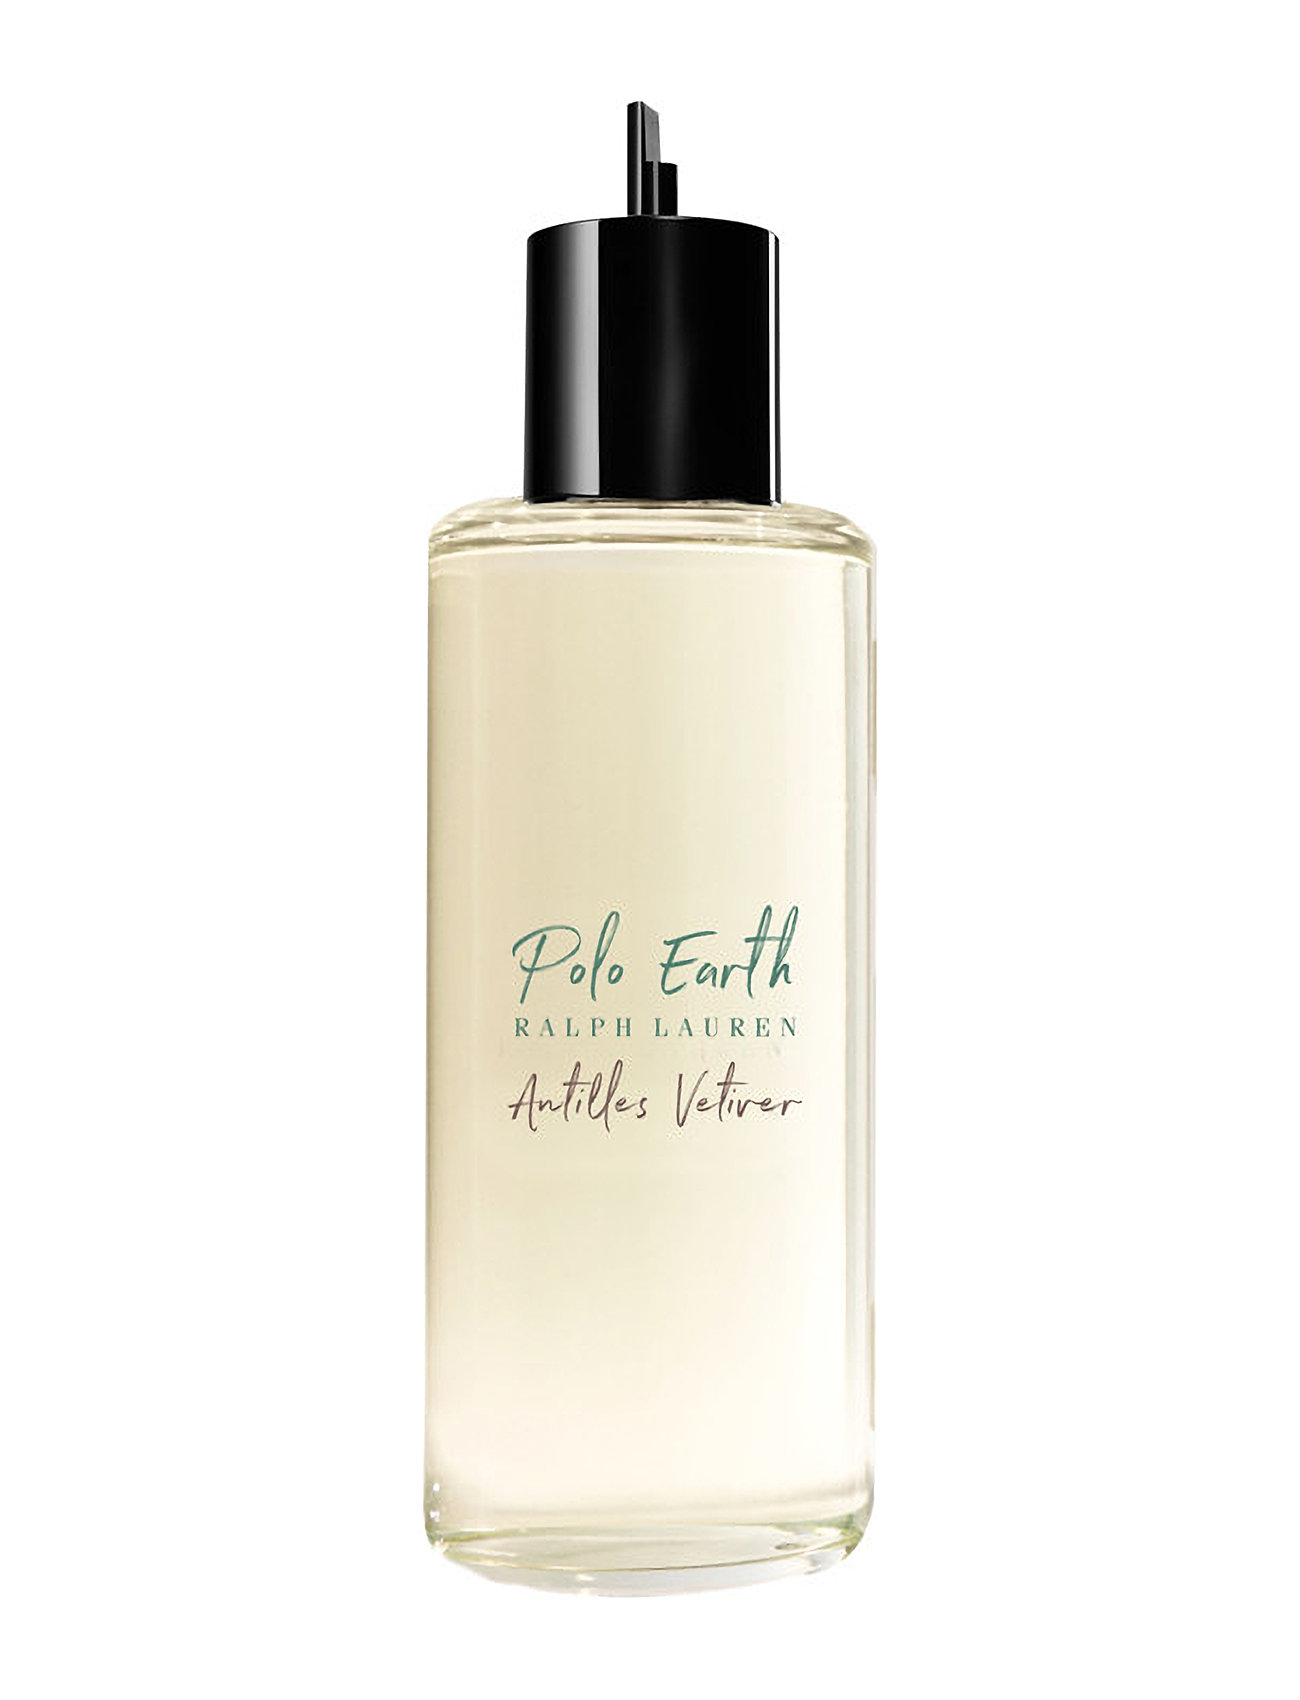 Polo Earth Antilles Refill Parfym Mist Nude Ralph Lauren - Fragrance